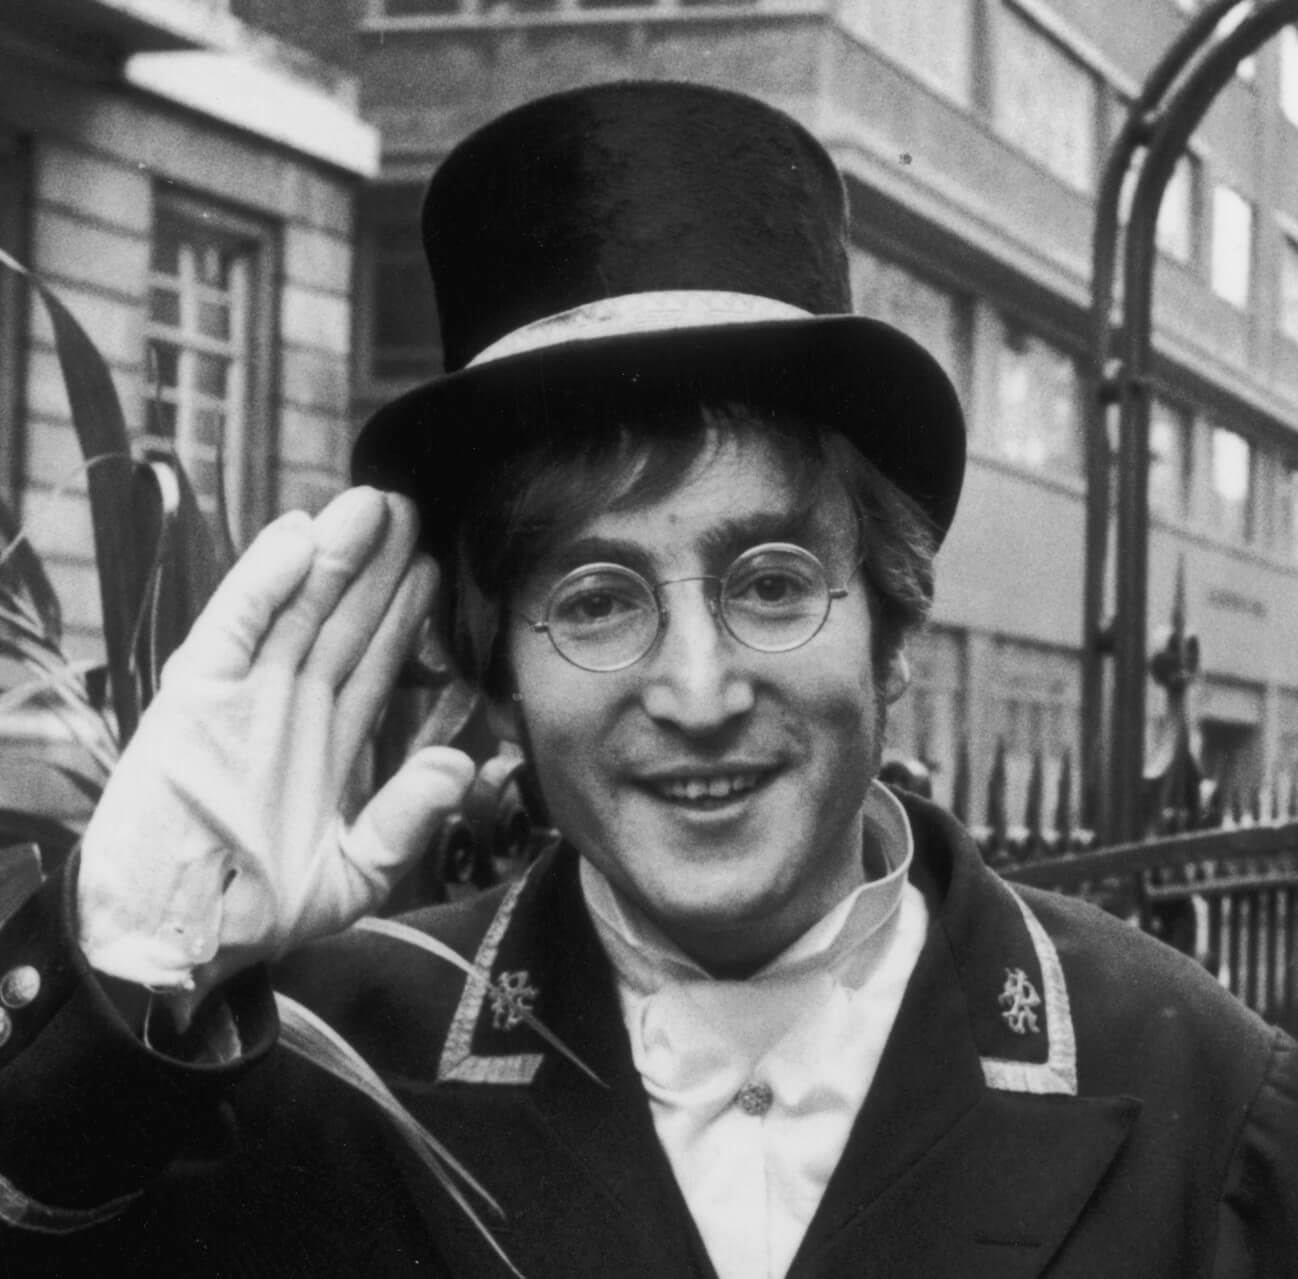 The Beatles' John Lennon saluting